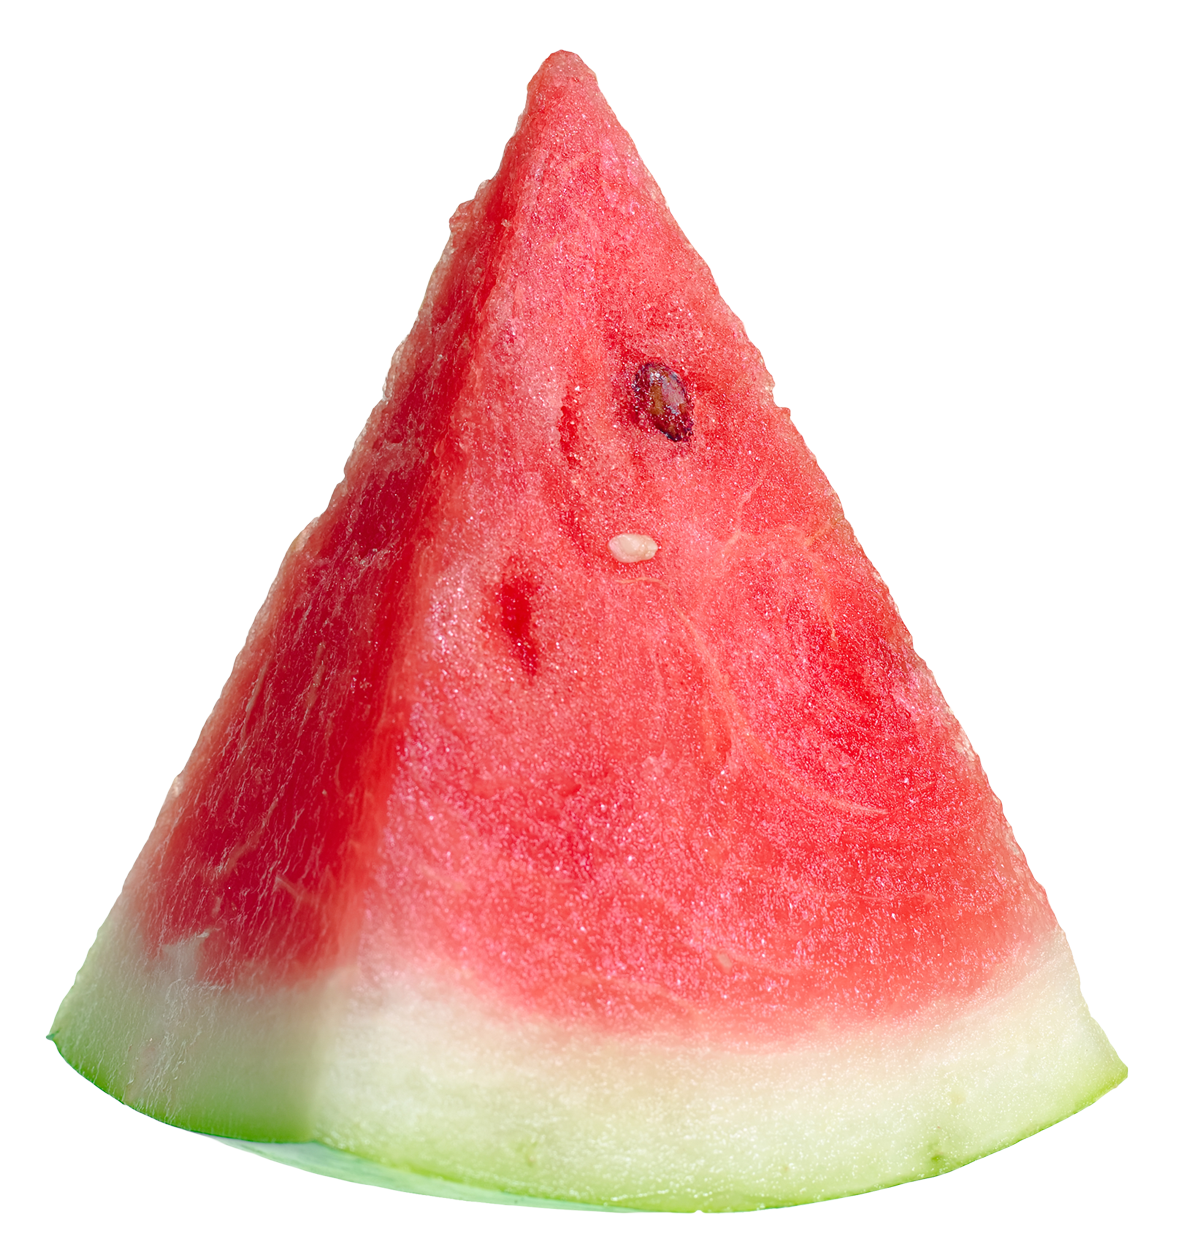 Fresh Watermelon Slice Transparent Background PNG image